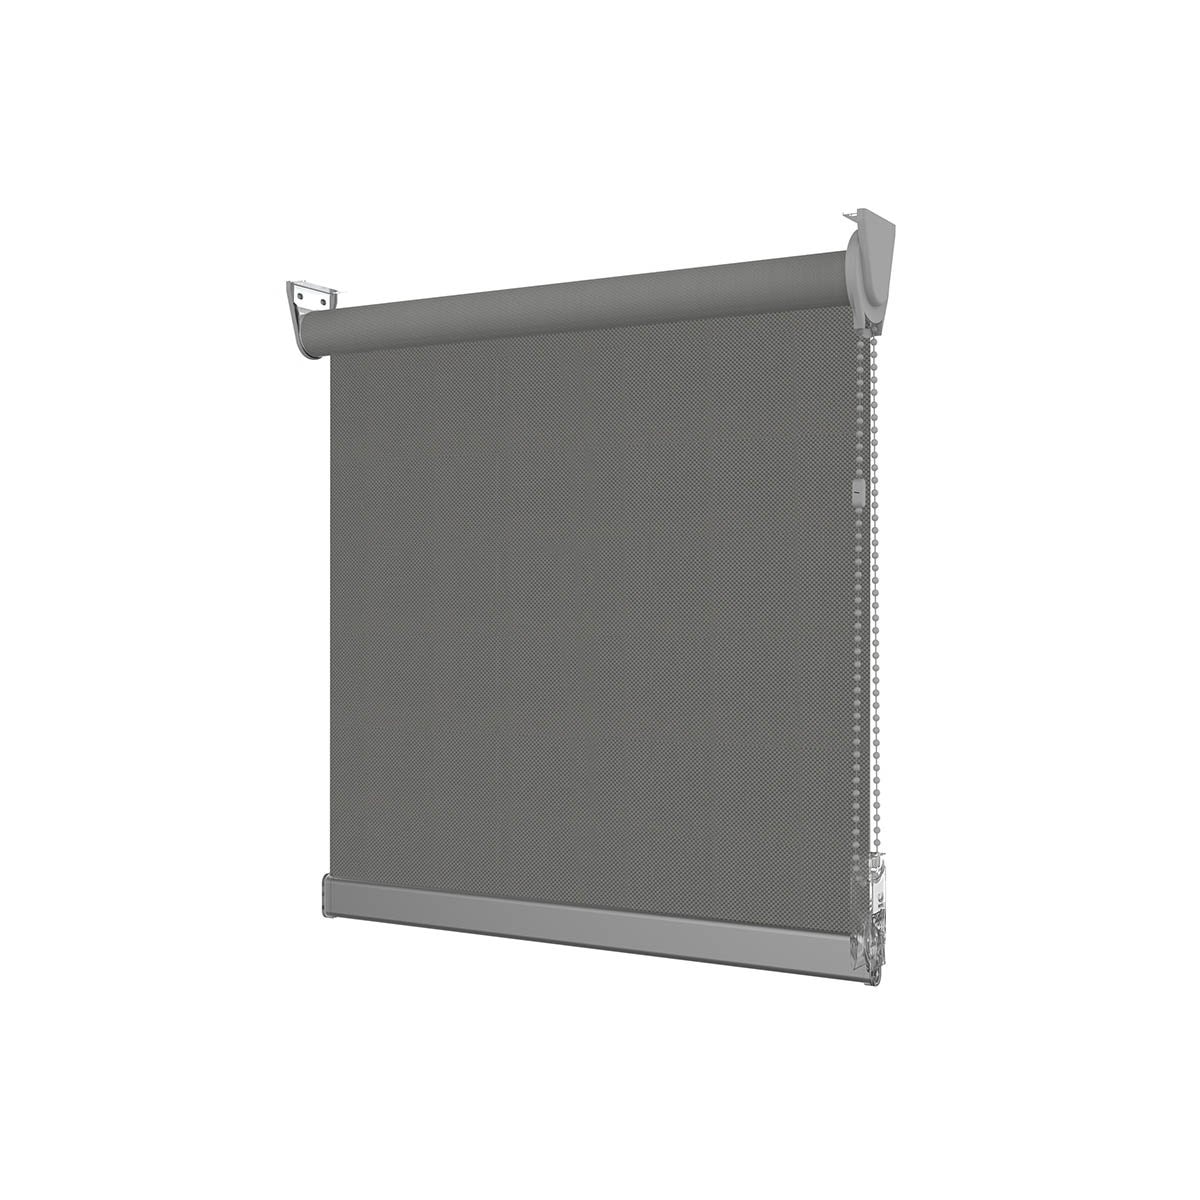 Persiana Enrollable Translucida Screen Phifer 4500 New 1.00 X 1.90 Granite Classic